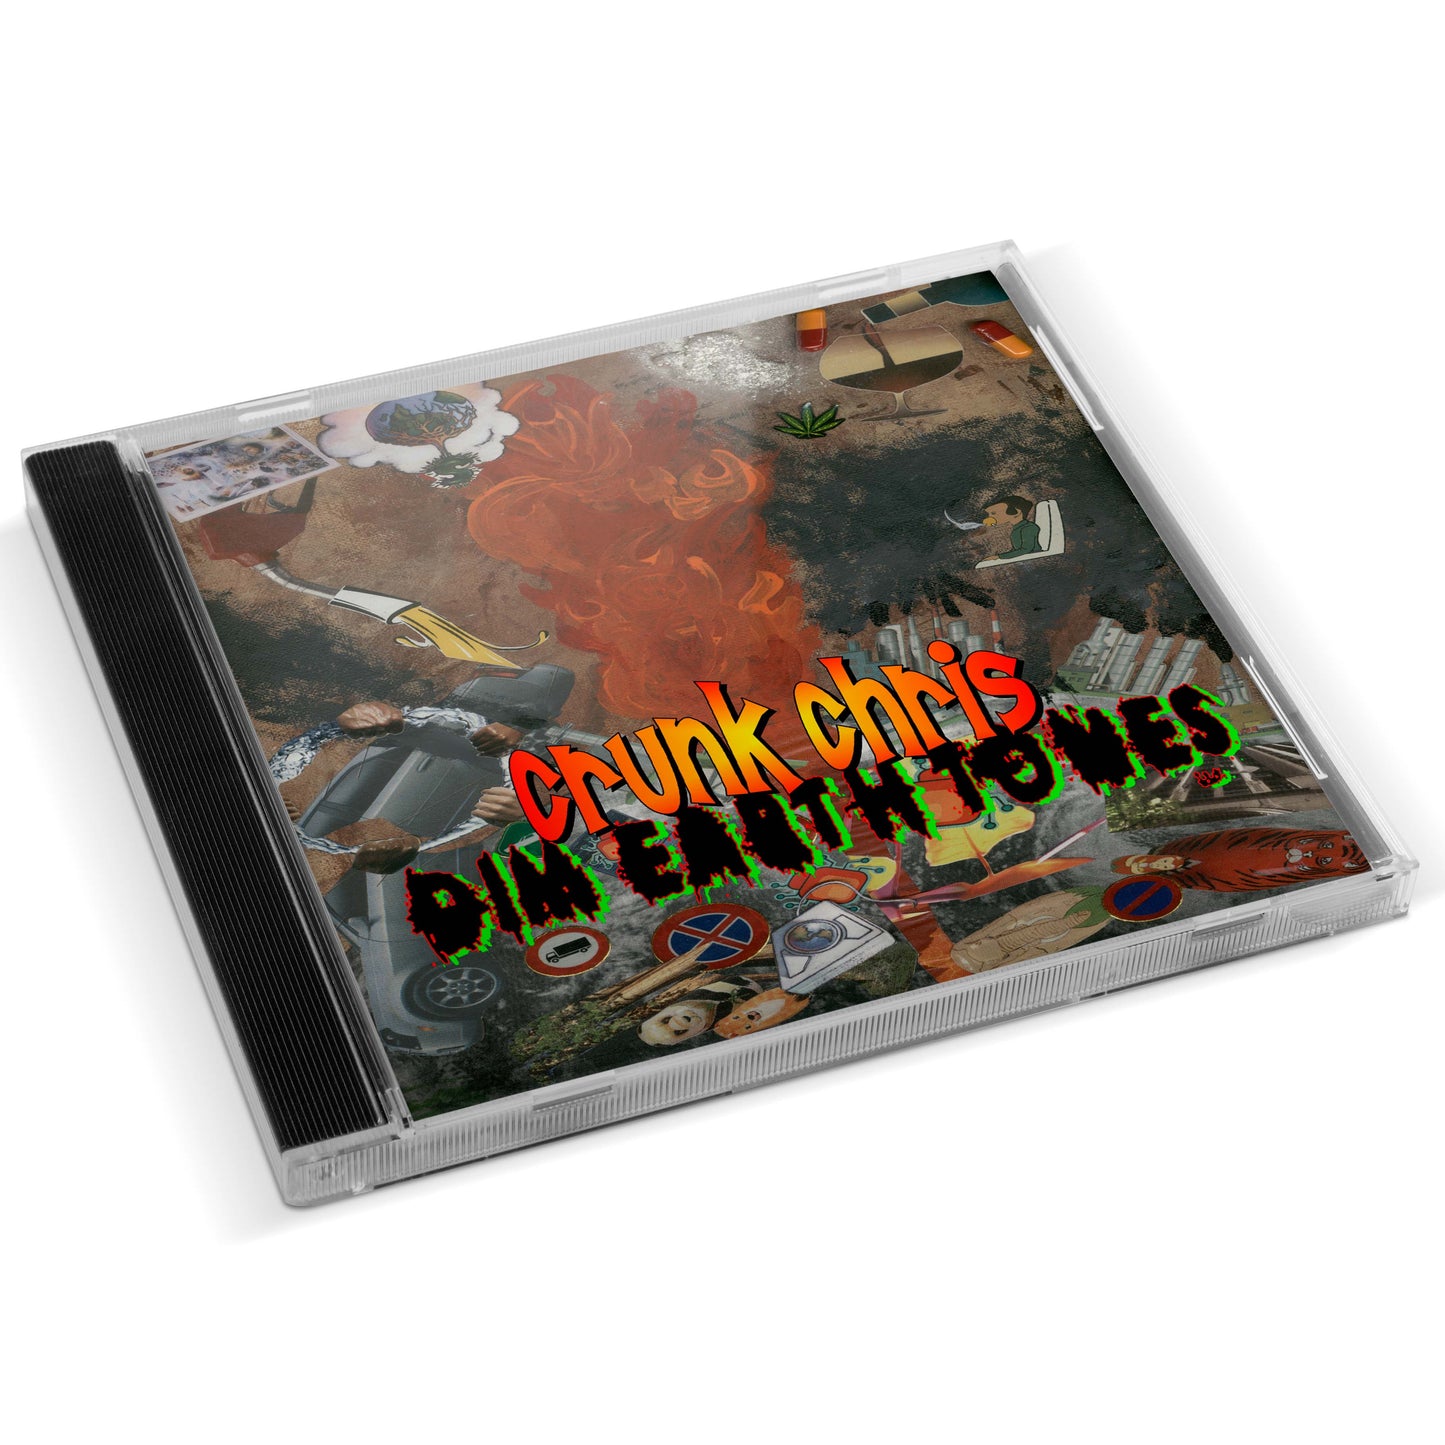 Crunk Chris - Dim Earth Tones CD